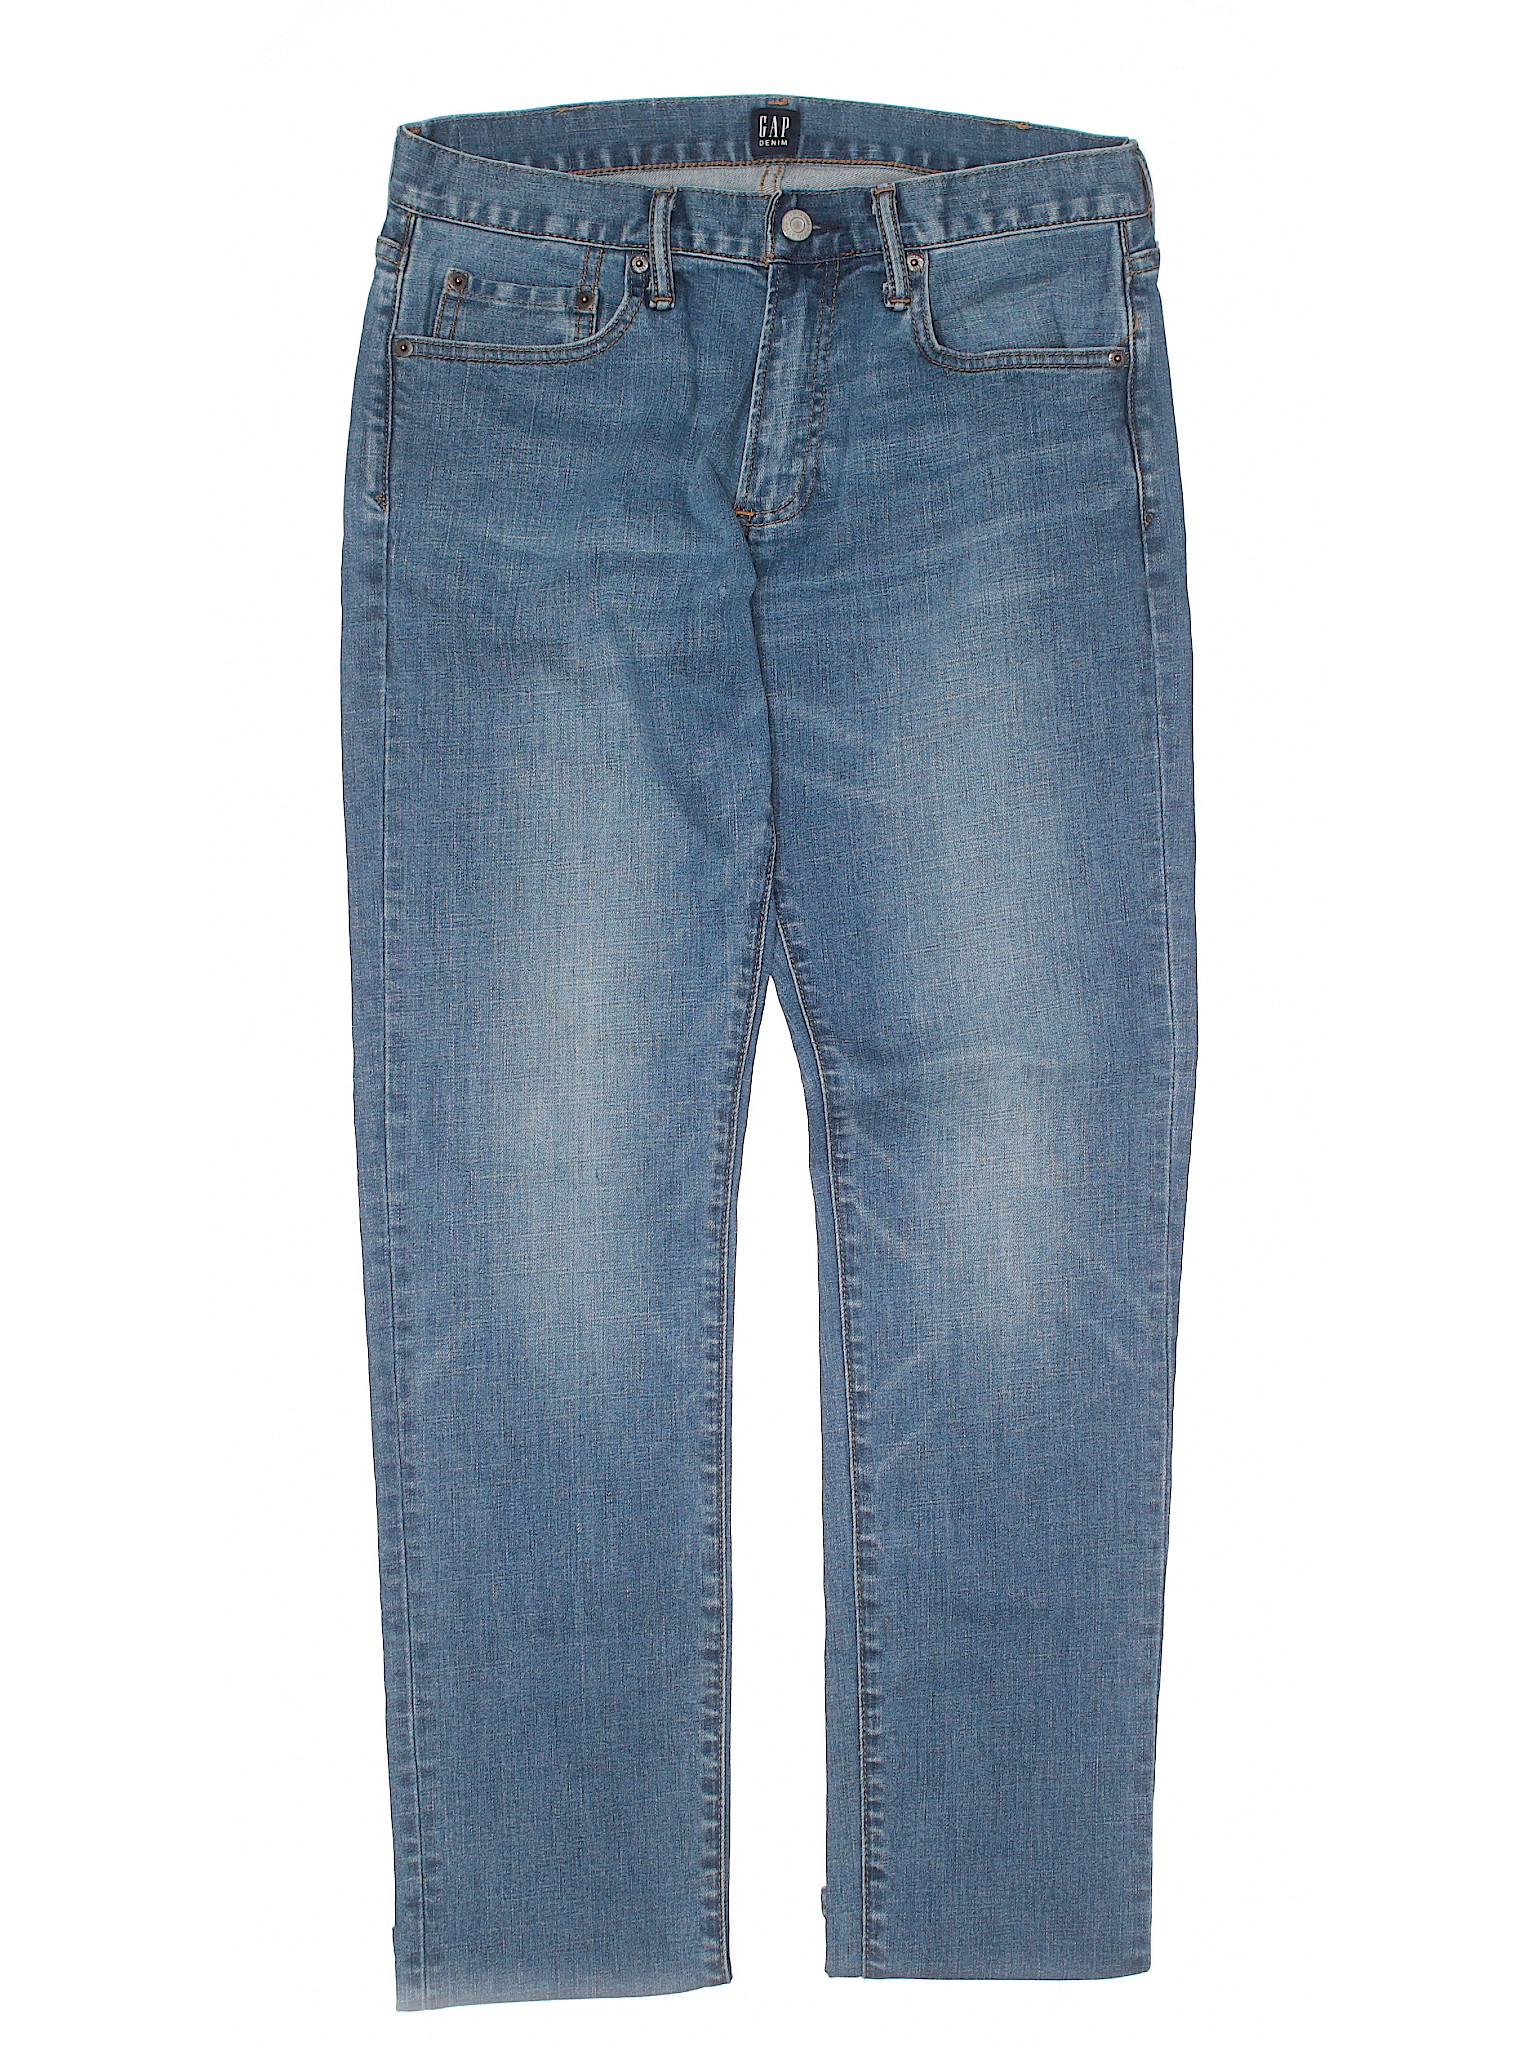 Gap Boys Blue Jeans 20 | eBay